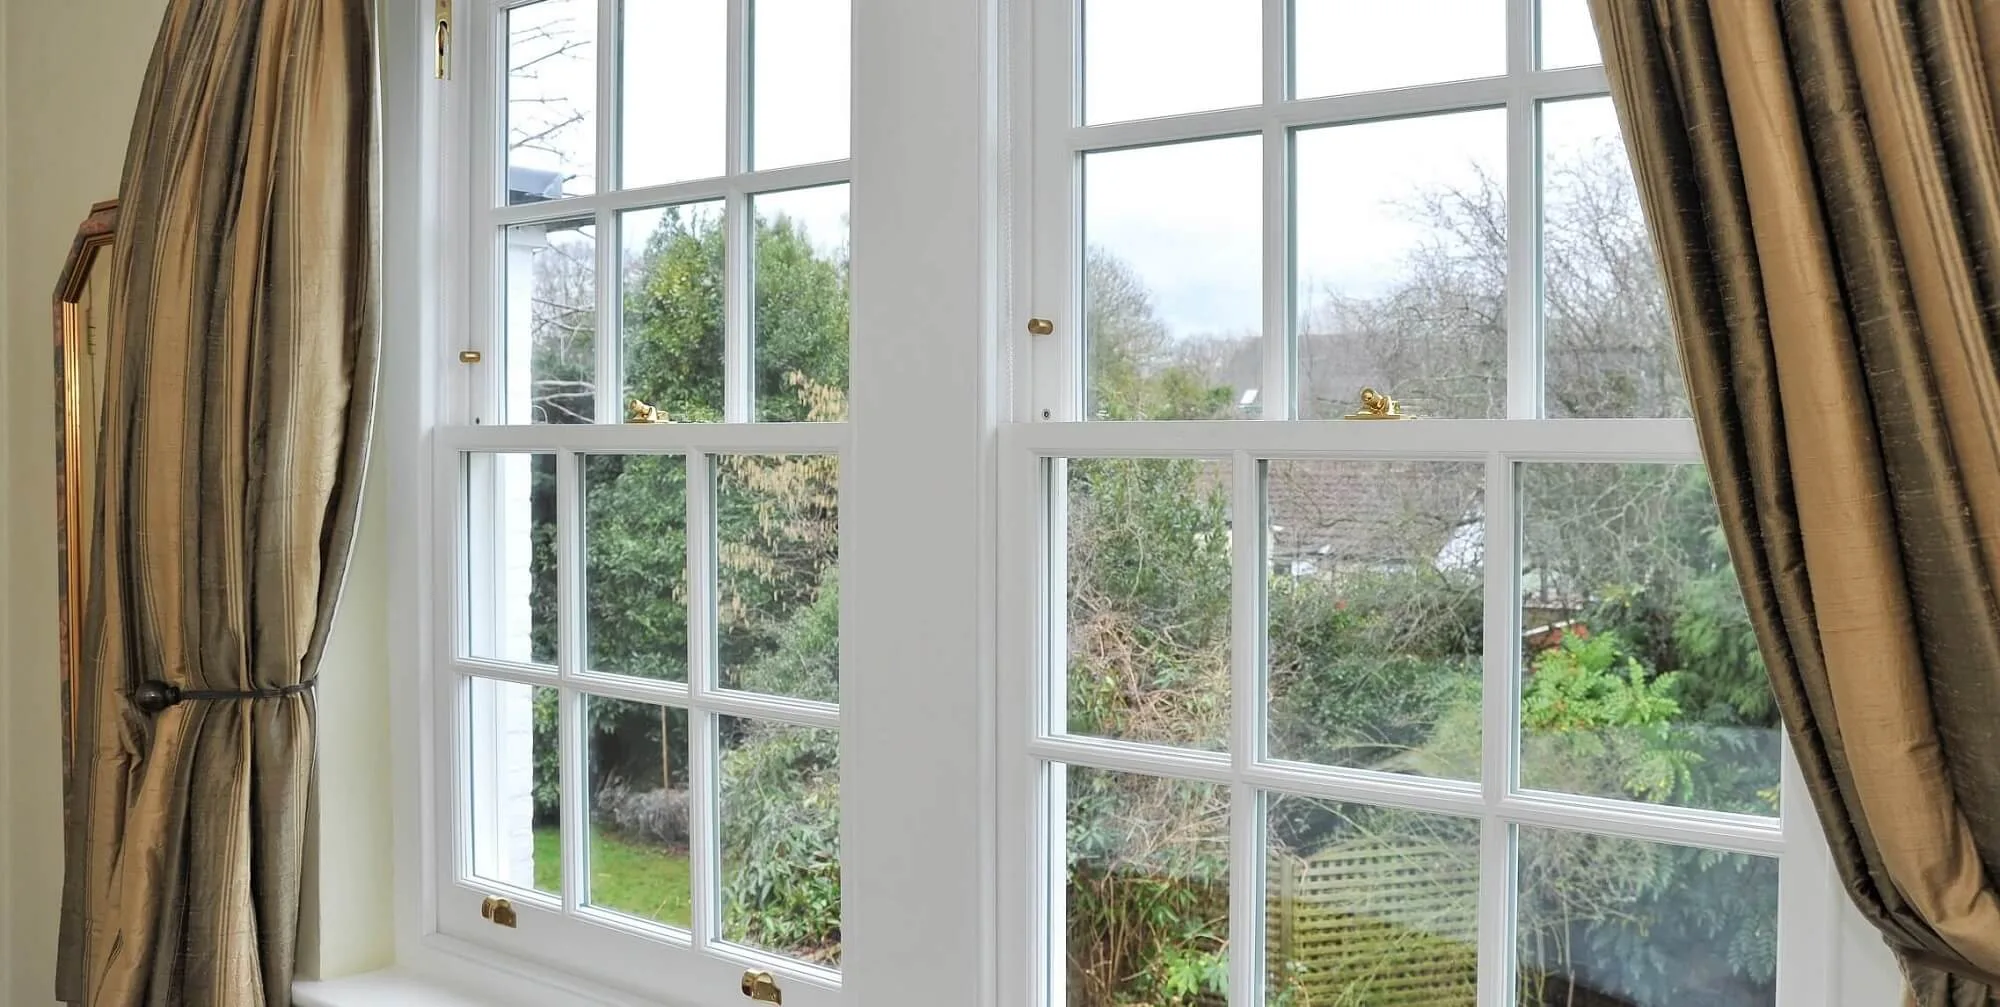 Do New Sliding Sash Windows Add Value to Your Home?